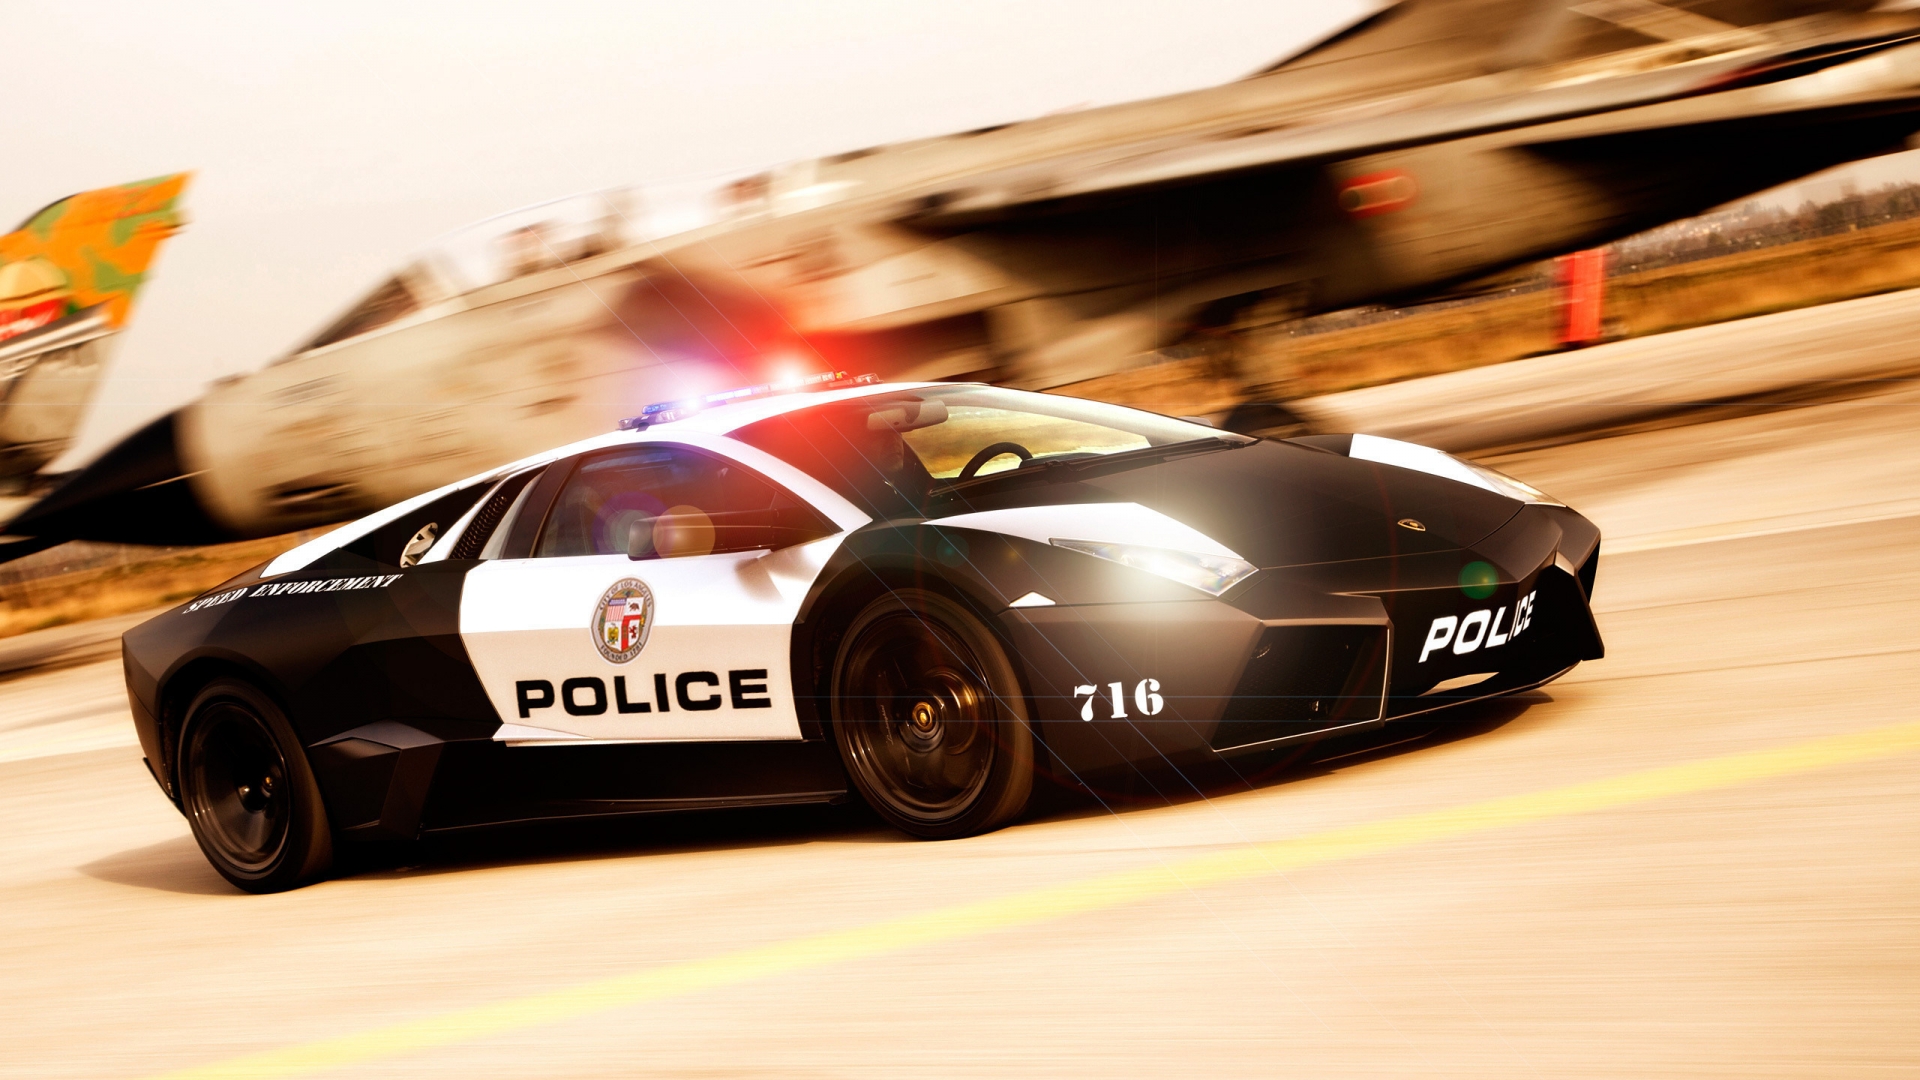 Lamborghini Police Car NFS for 1920 x 1080 HDTV 1080p resolution